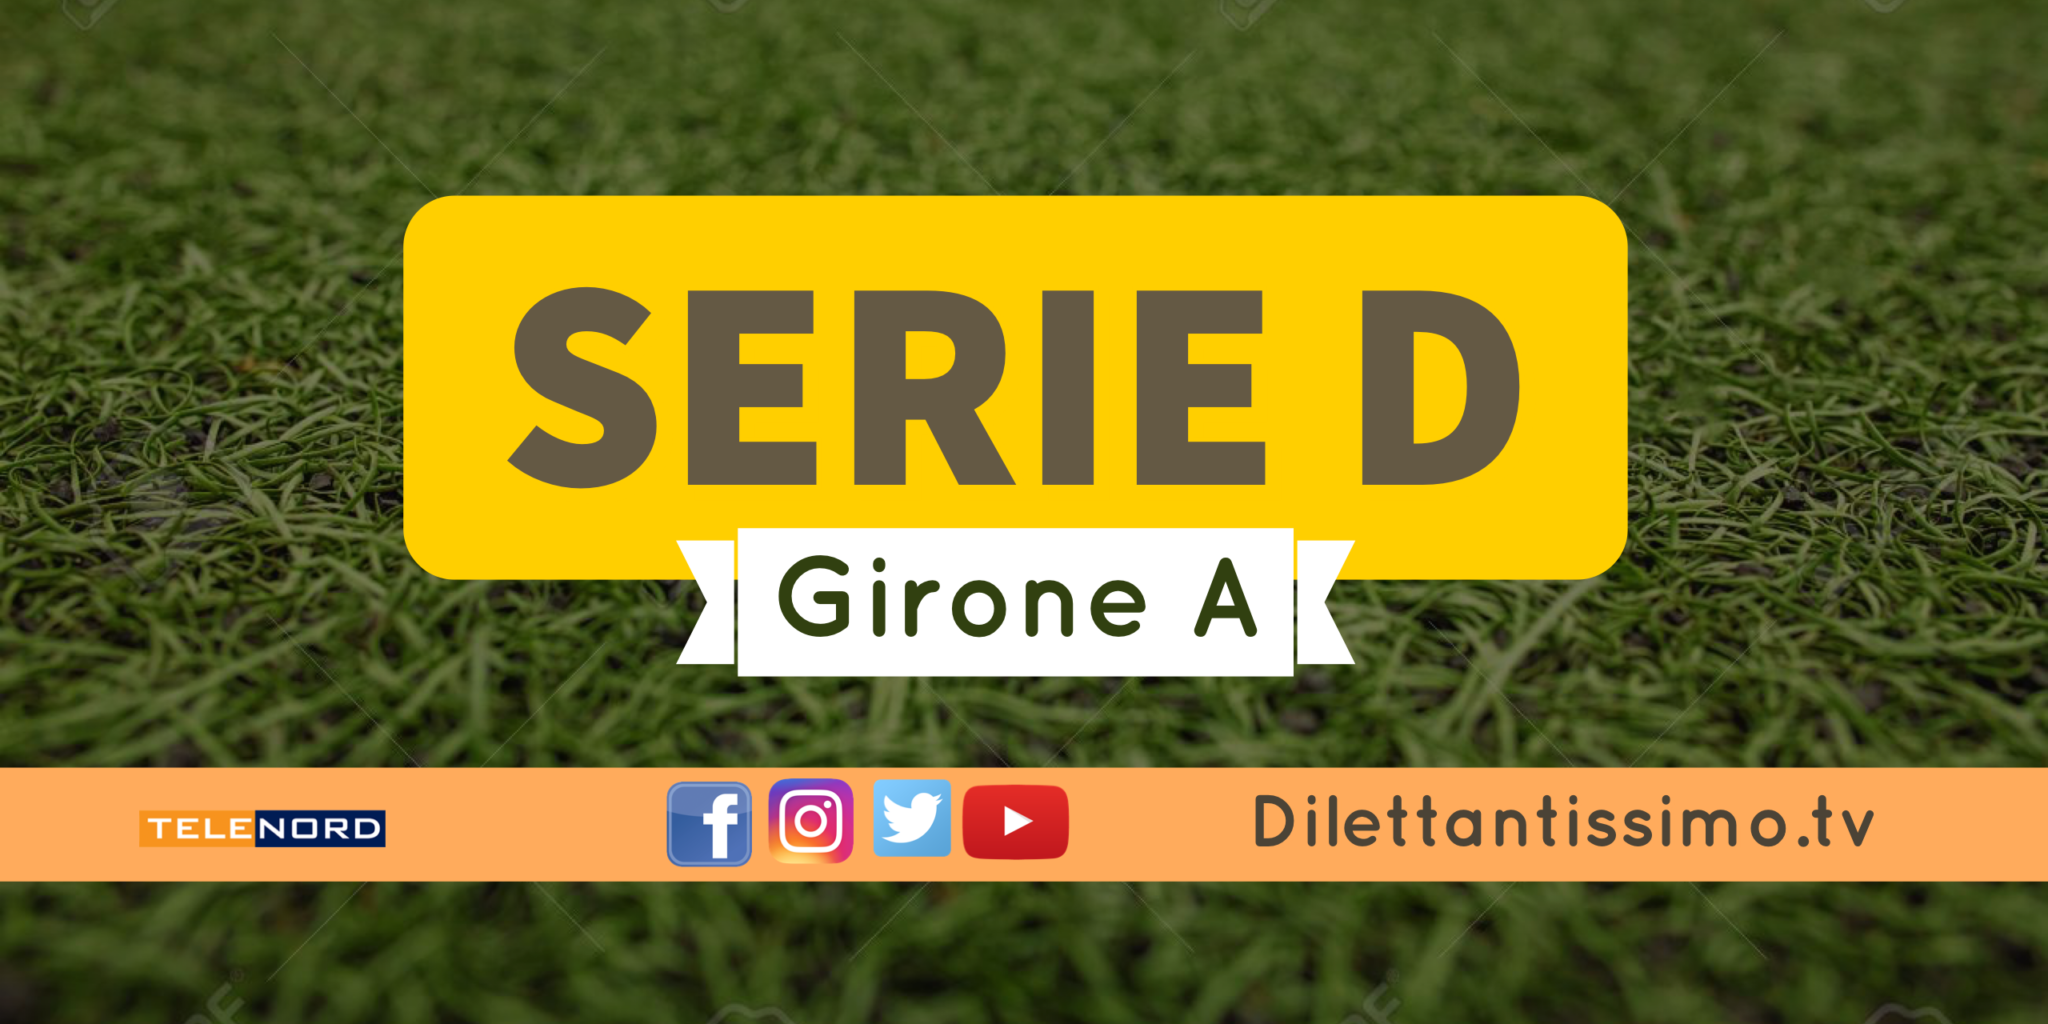 DIRETTA LIVE – SERIE D, GIRONE A, 25ª giornata